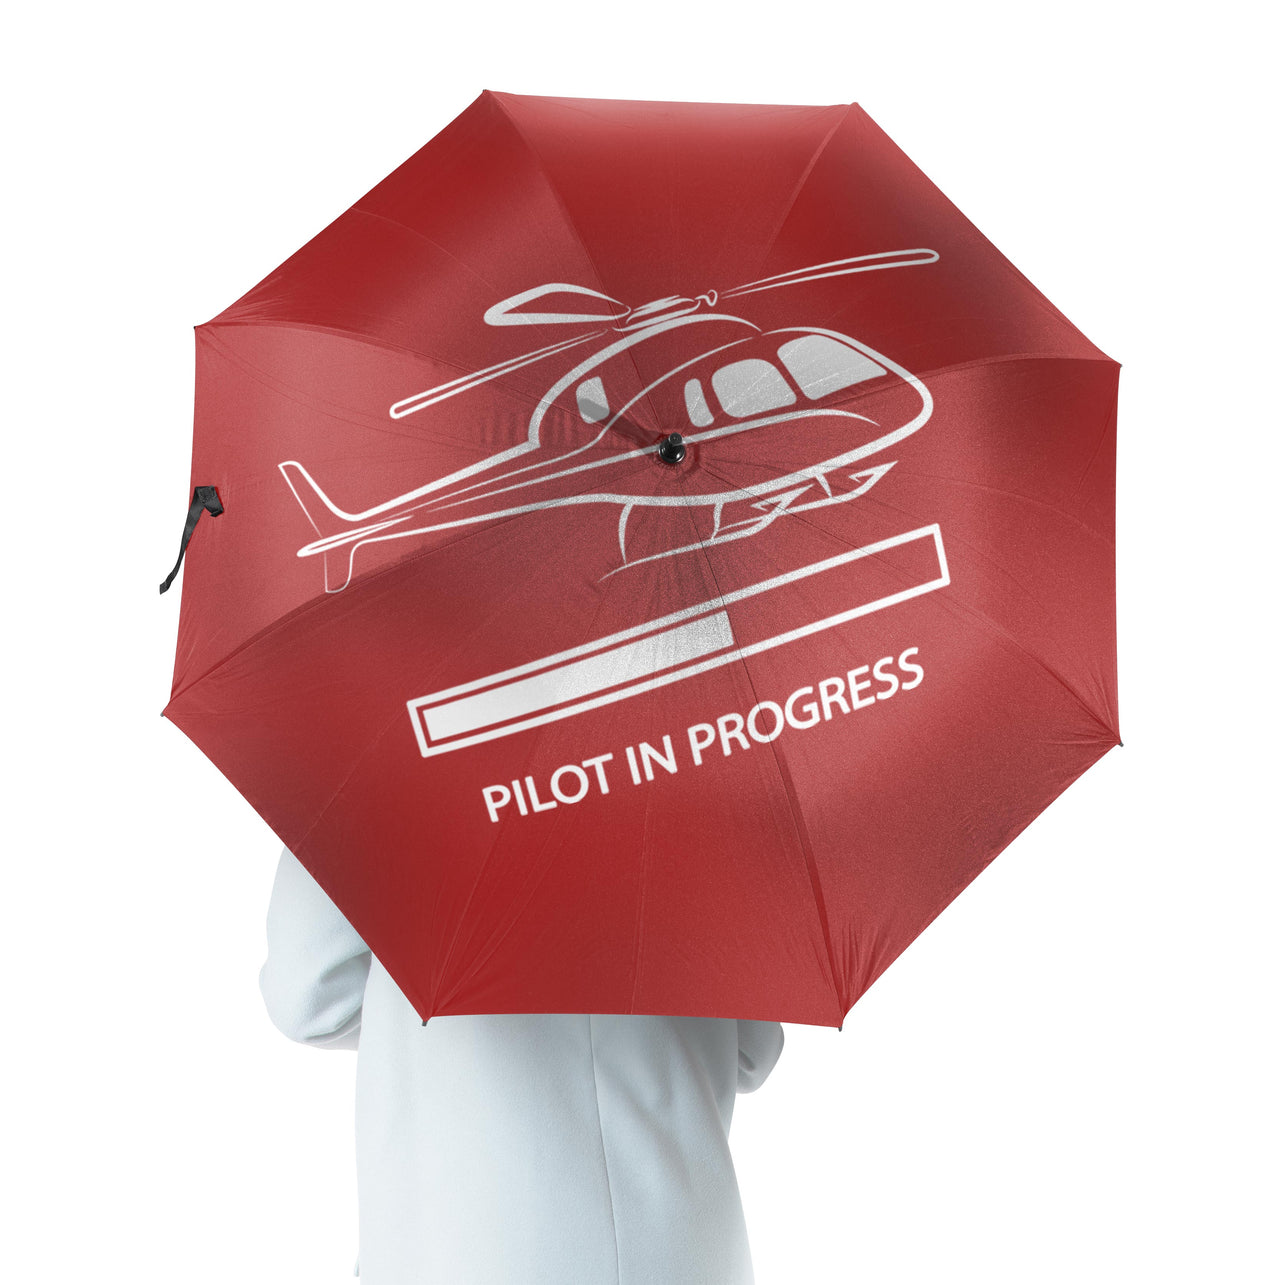 Pilot In Progress (Helicopter) Designed Umbrella